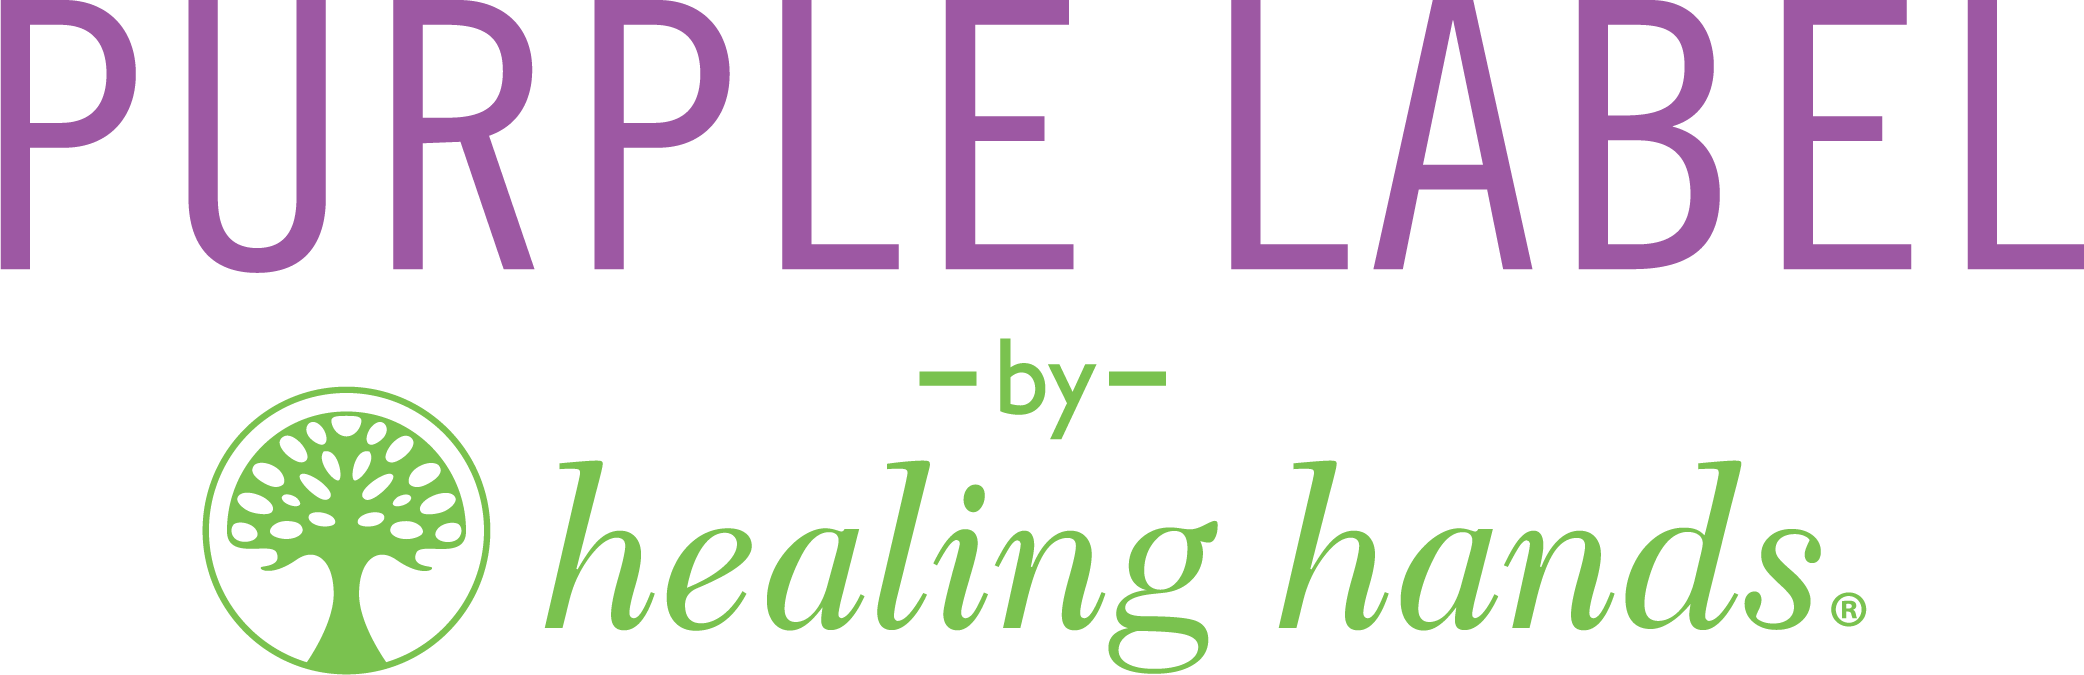 Purple Label logo